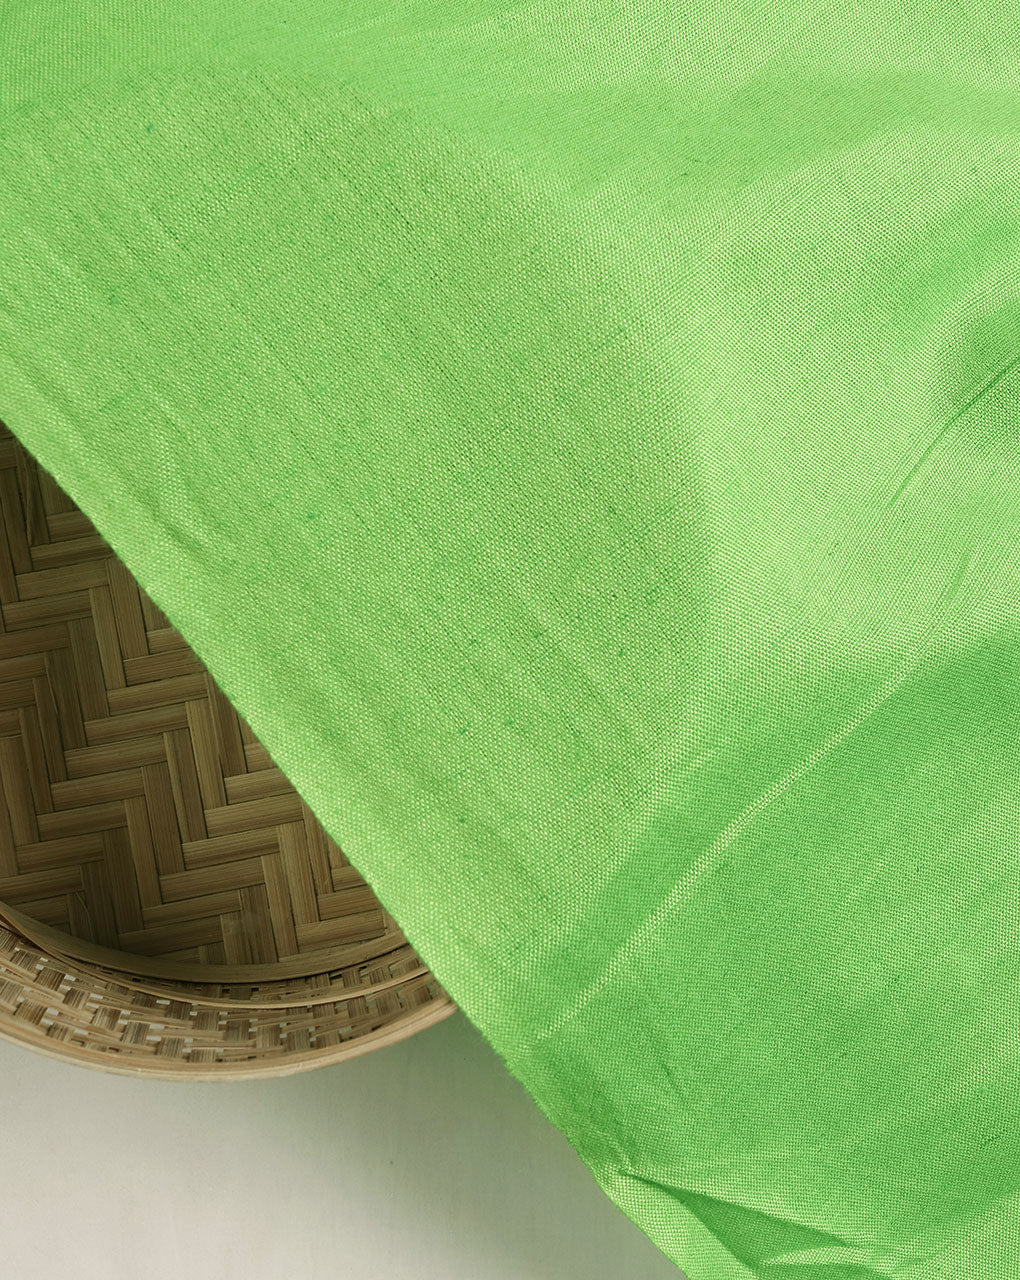 Green Plain Flex Rayon Fabric - Fabriclore.com